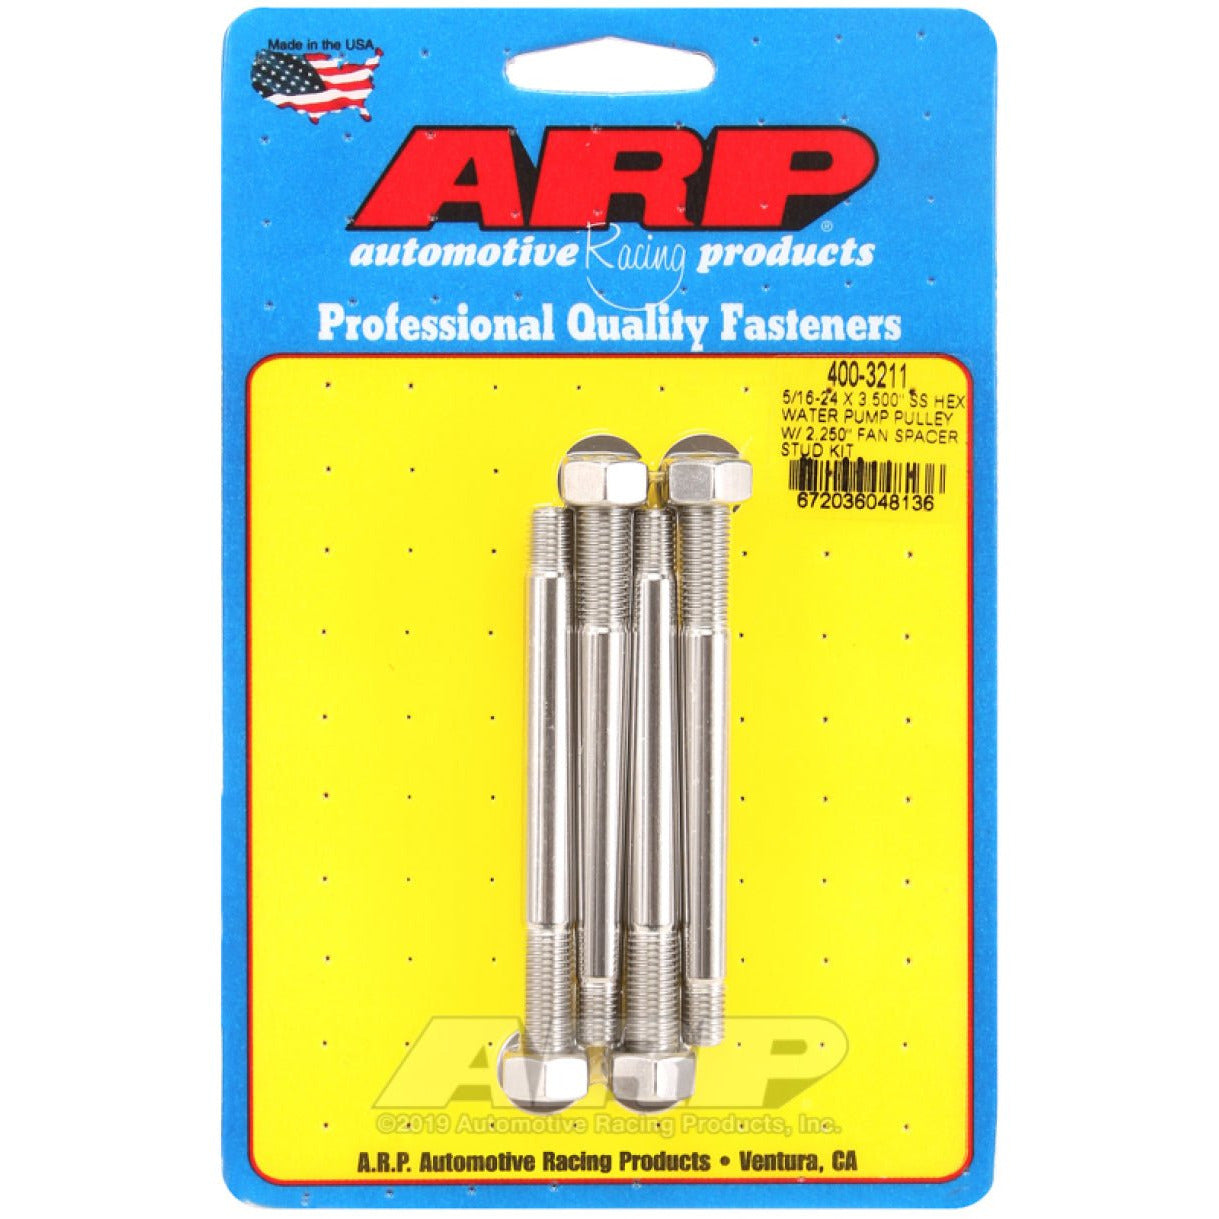 ARP 5/16-24 X 3.500 SS Hex Water Pump Pulley w/ 2.250in Fan Spacer Stud Kit ARP Hardware - Singles